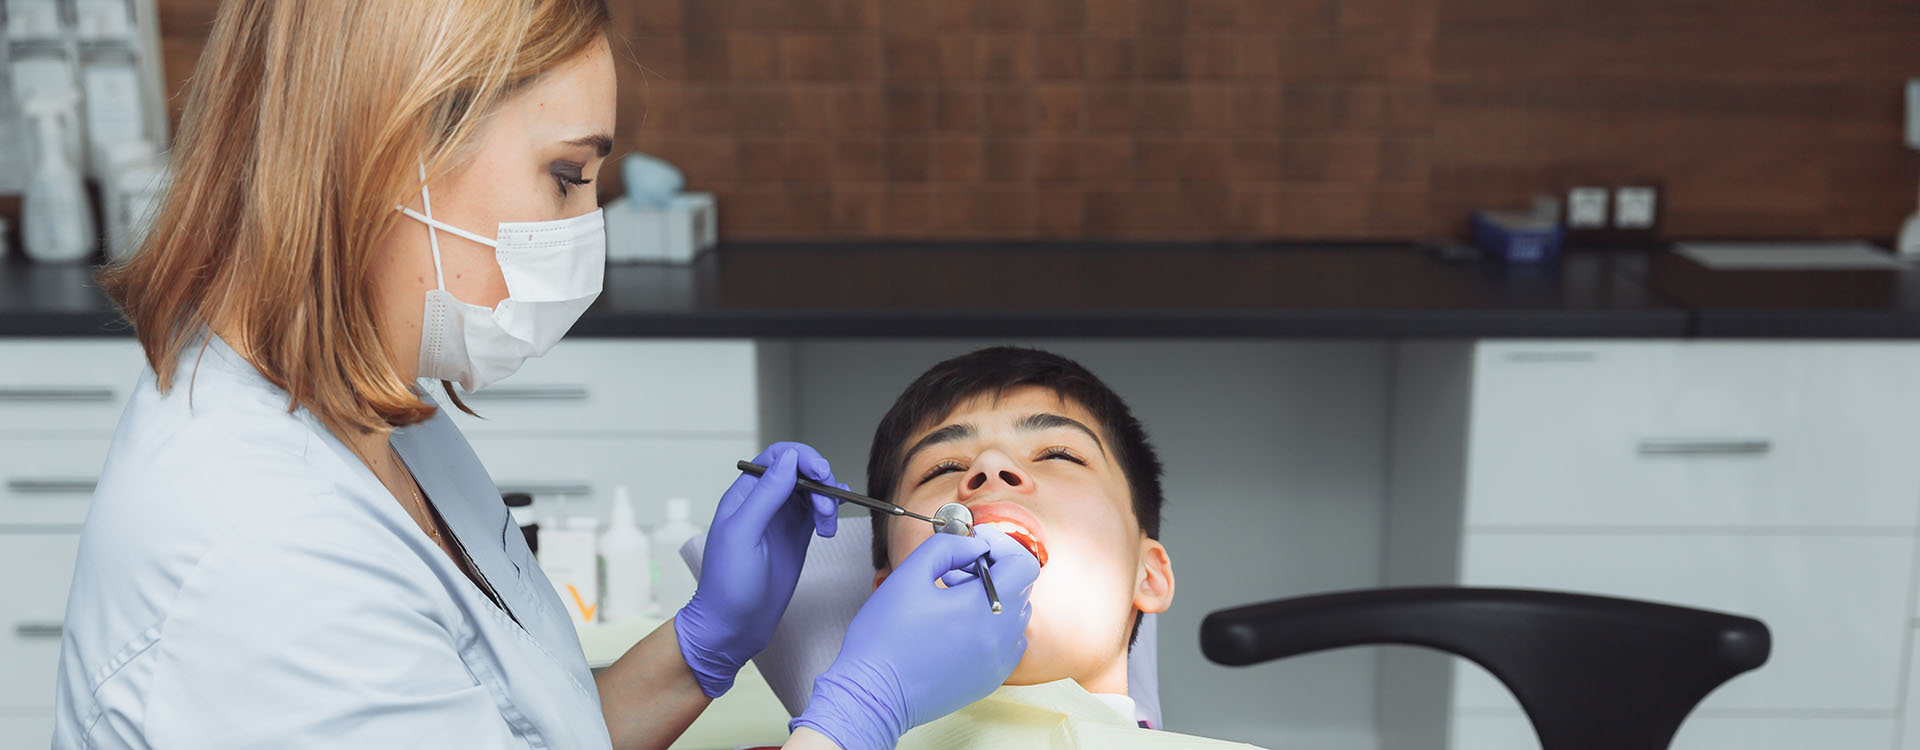 Clínica Dental Andrea Compte, tu Centro Odontológico especializado. Odontopediatría en Cálig. Odontóloga examina los dientes de un niño en la clínica.